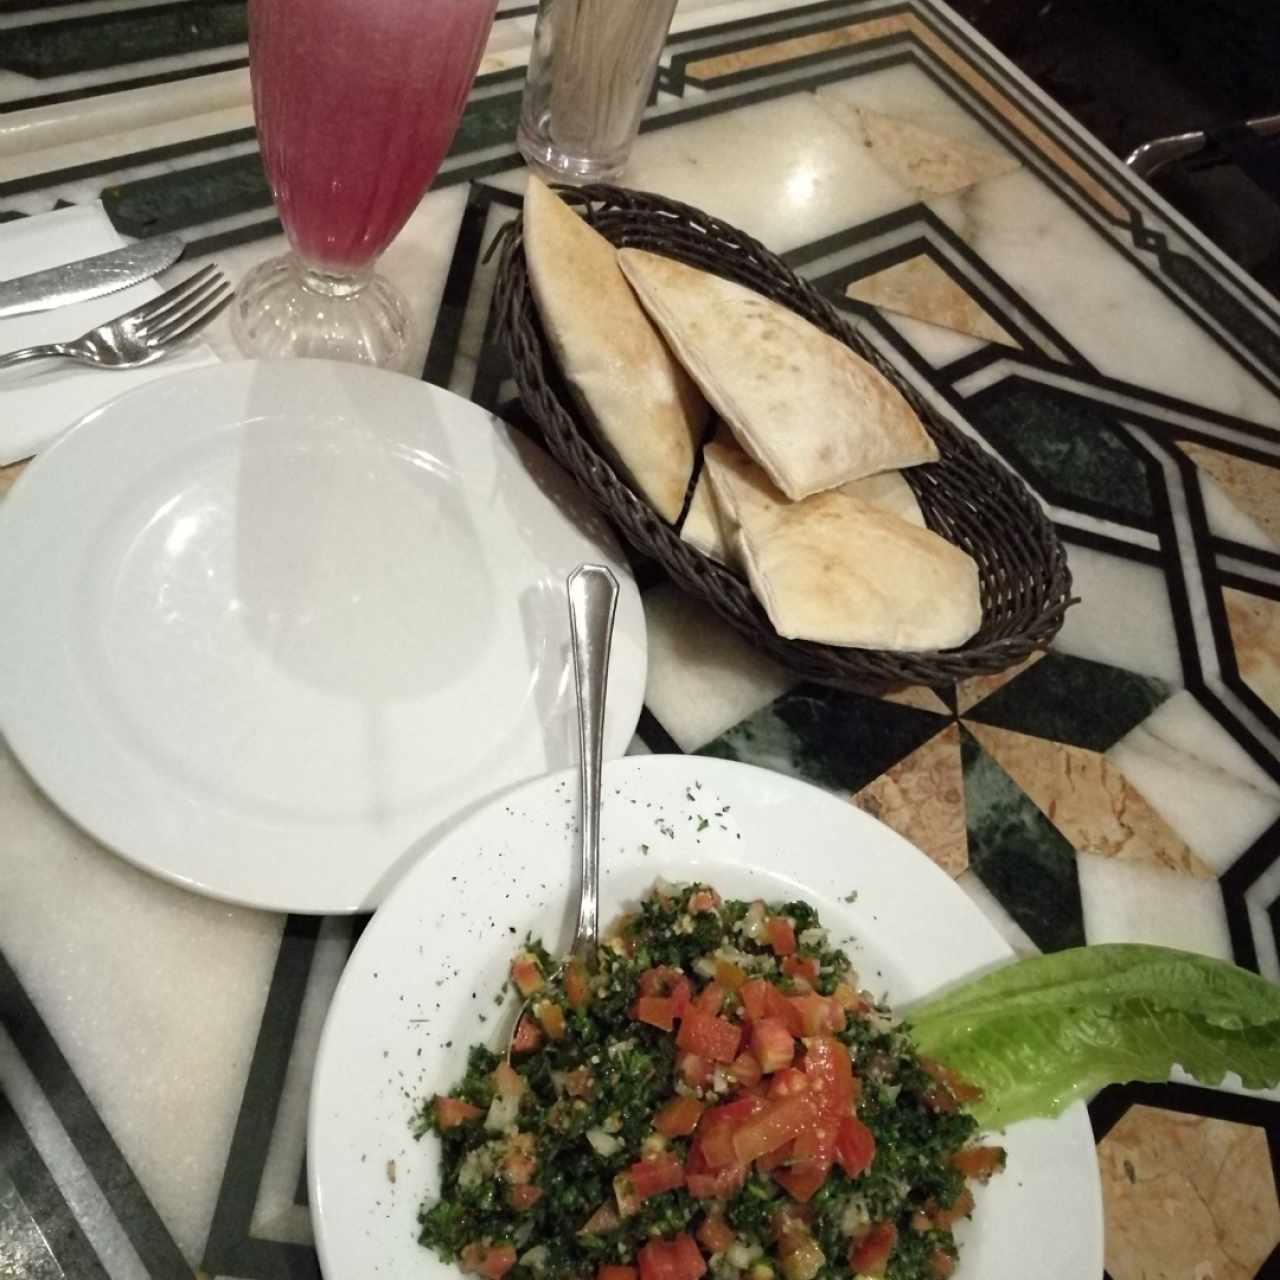 limonada libanesa, pan pita y tabúes.